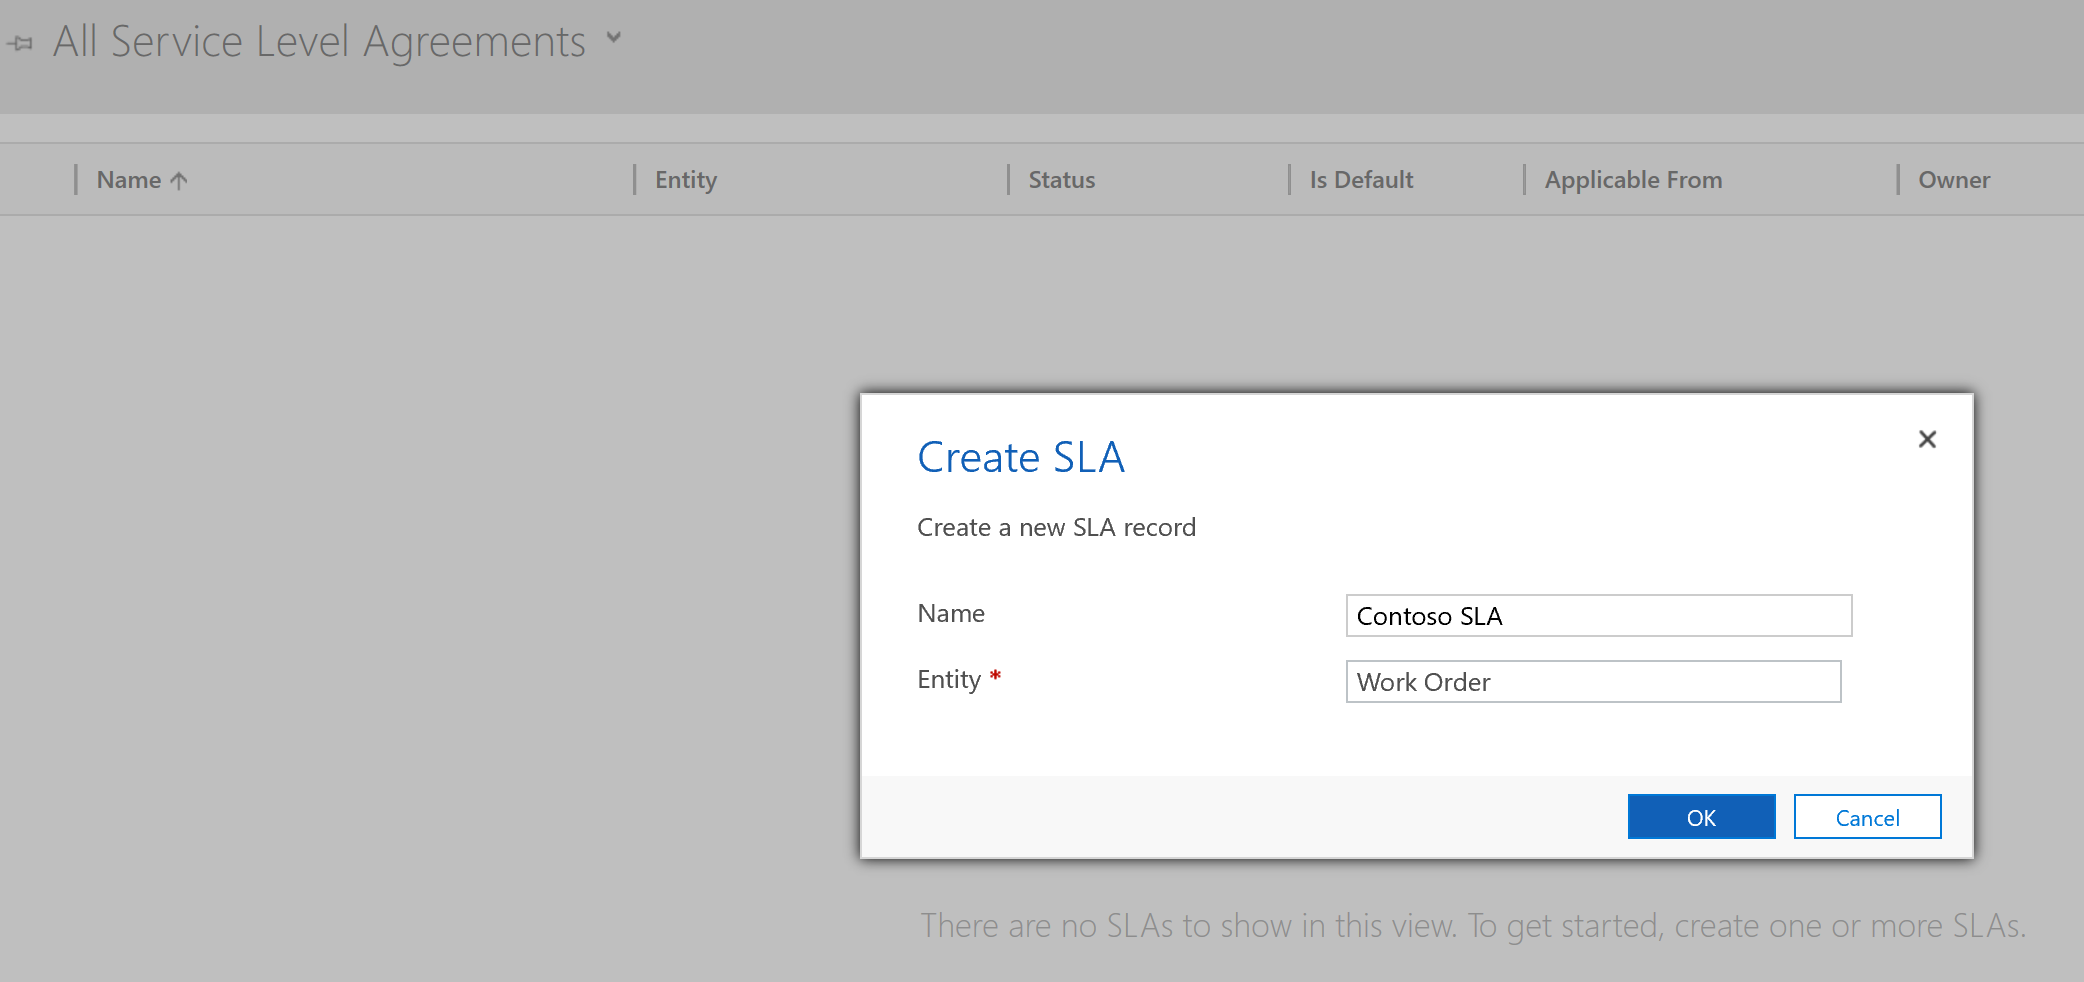 Screenshot of creating a new SLA for Work Order entity.